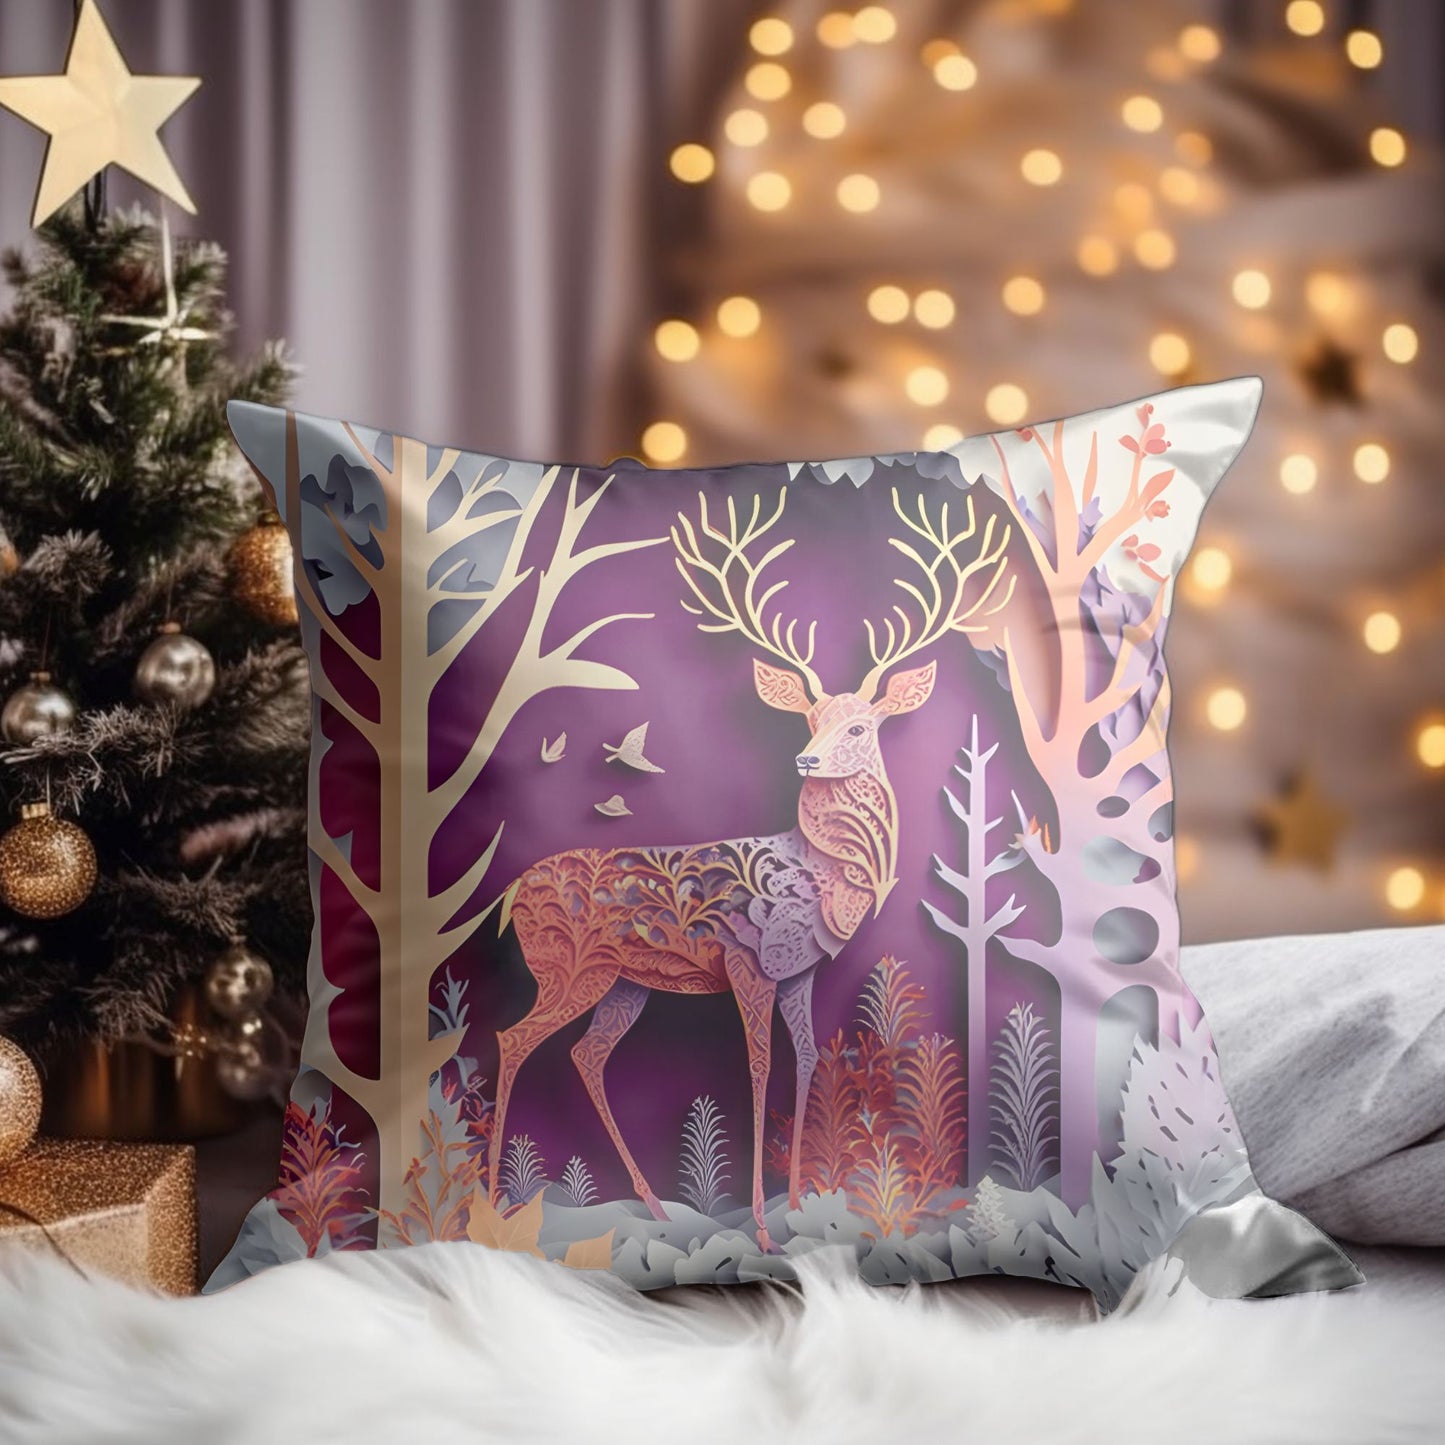 Playful Reindeer Cushion Cover for Holiday Season